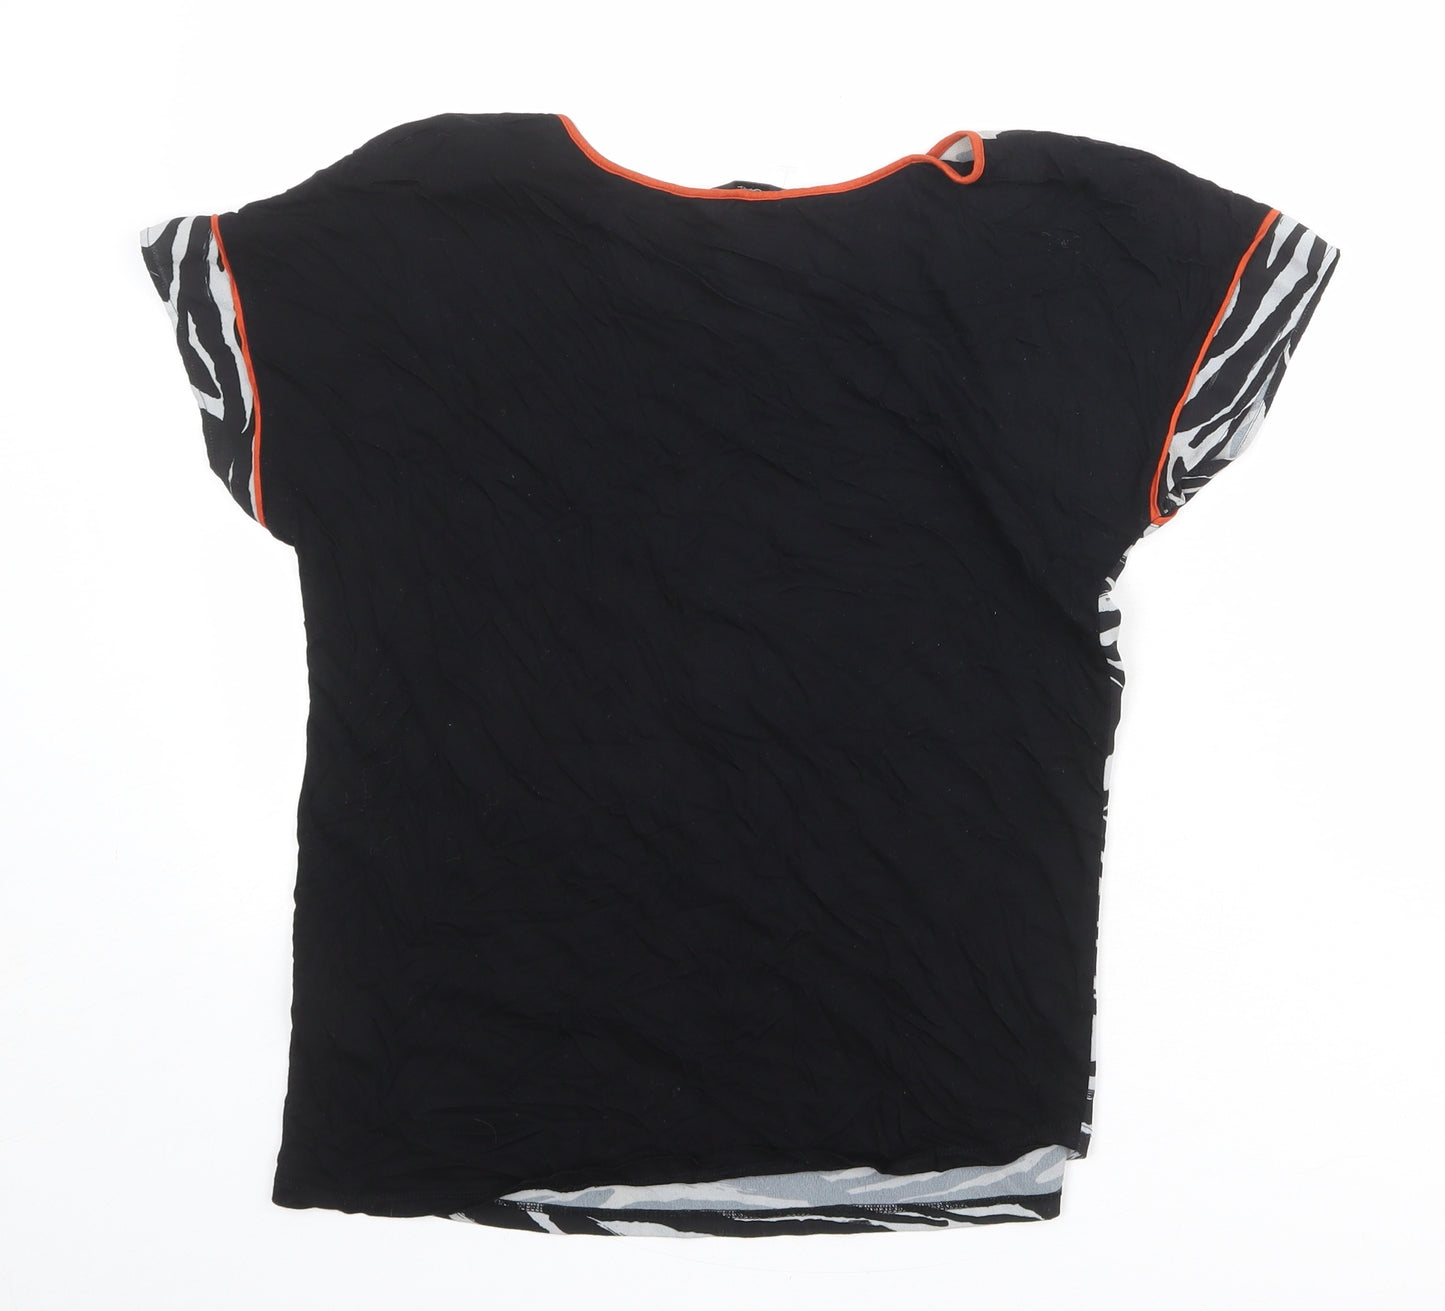 NEXT Womens Black Animal Print Polyester Basic T-Shirt Size 6 Boat Neck - Zebra Print